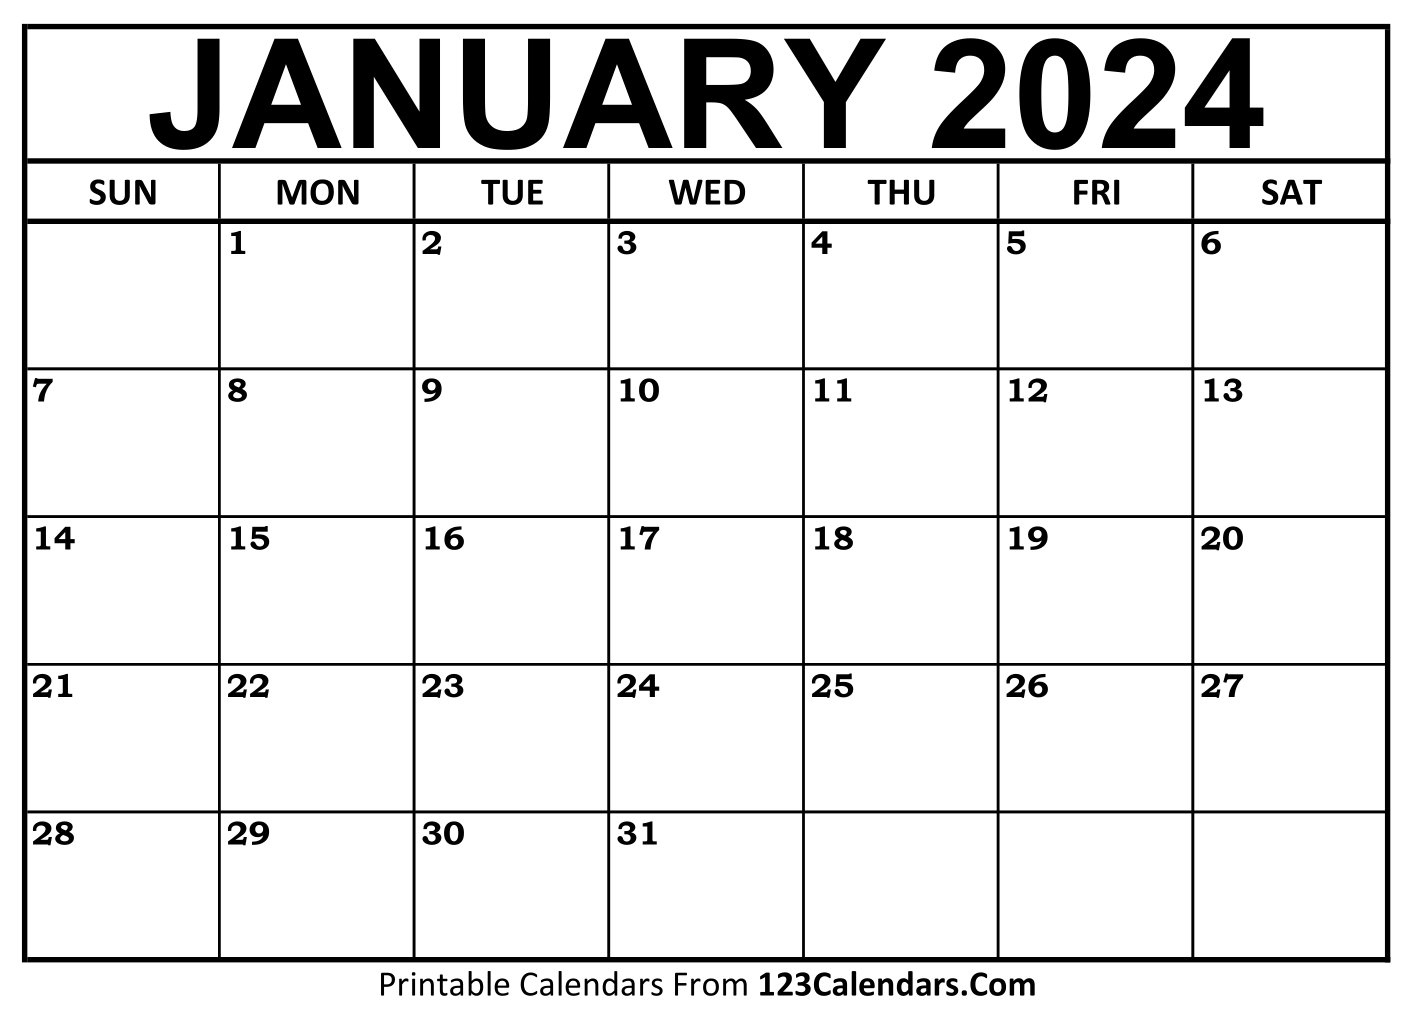 Printable January 2024 Calendar Templates - 123Calendars | Jan 2024 Calendar